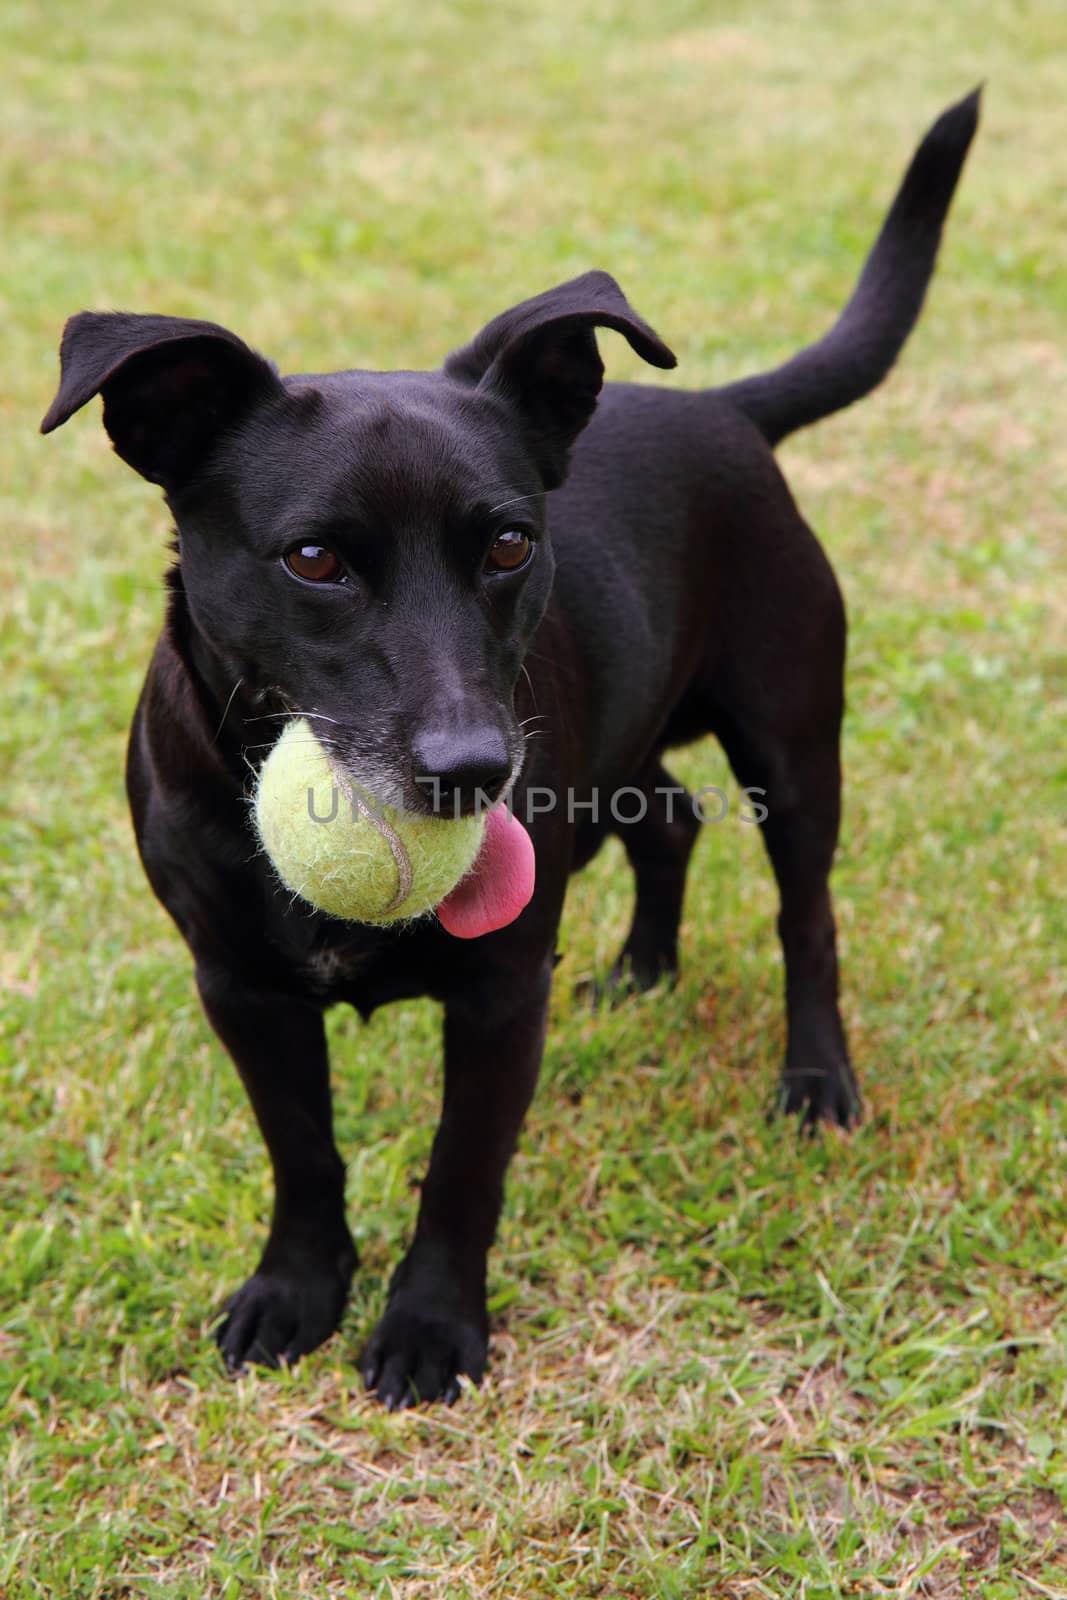 black dog as tennis player by jonnysek